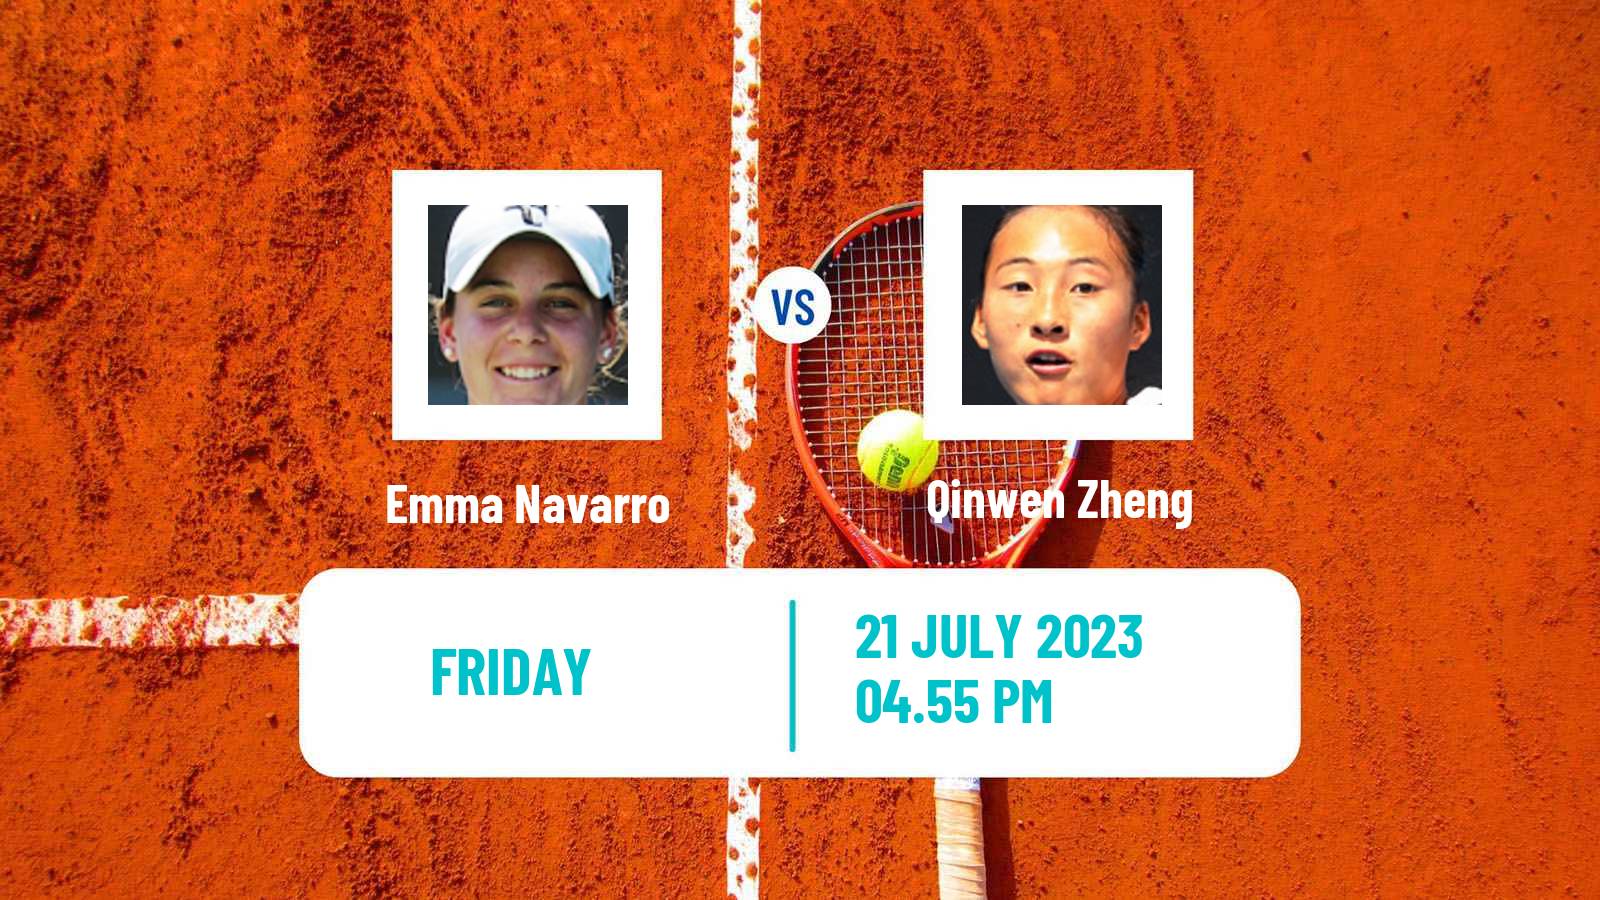 Tennis WTA Palermo Emma Navarro - Qinwen Zheng